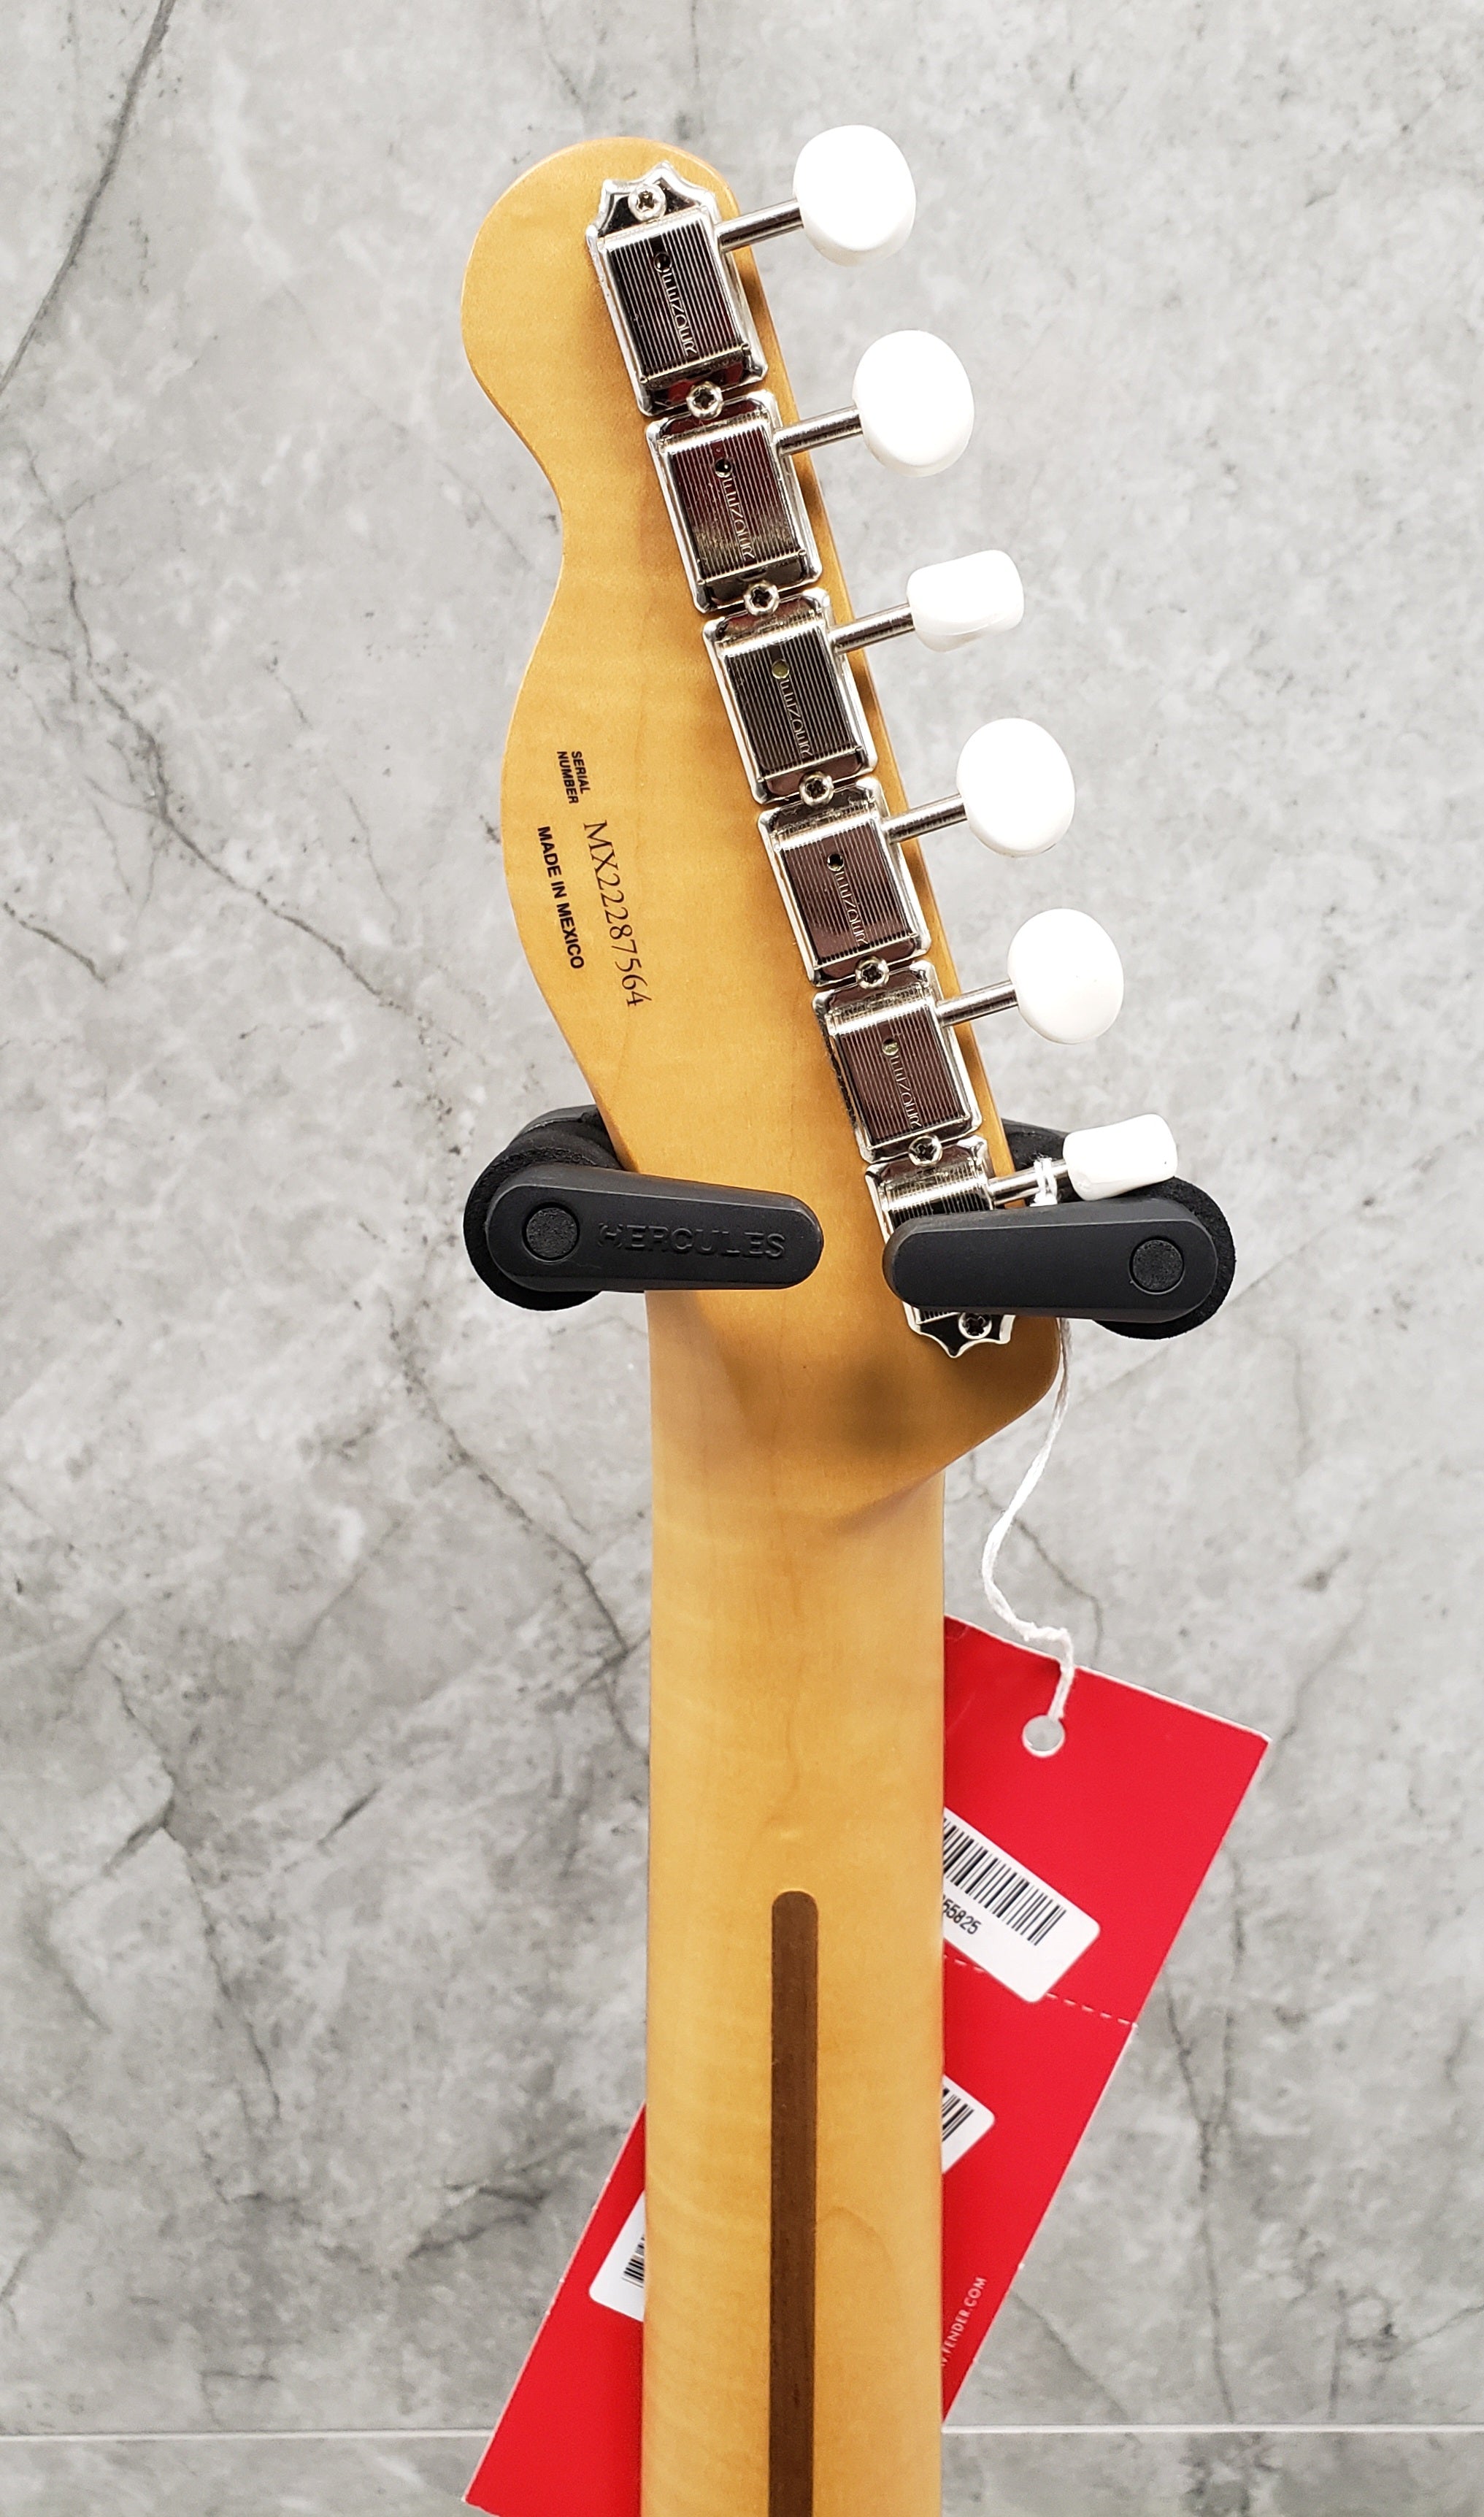 Fender Gold Foil Telecaster Ebony Fingerboard White Blonde 0140731301 SERIAL NUMBER MX22287564 - 8.4 LBS